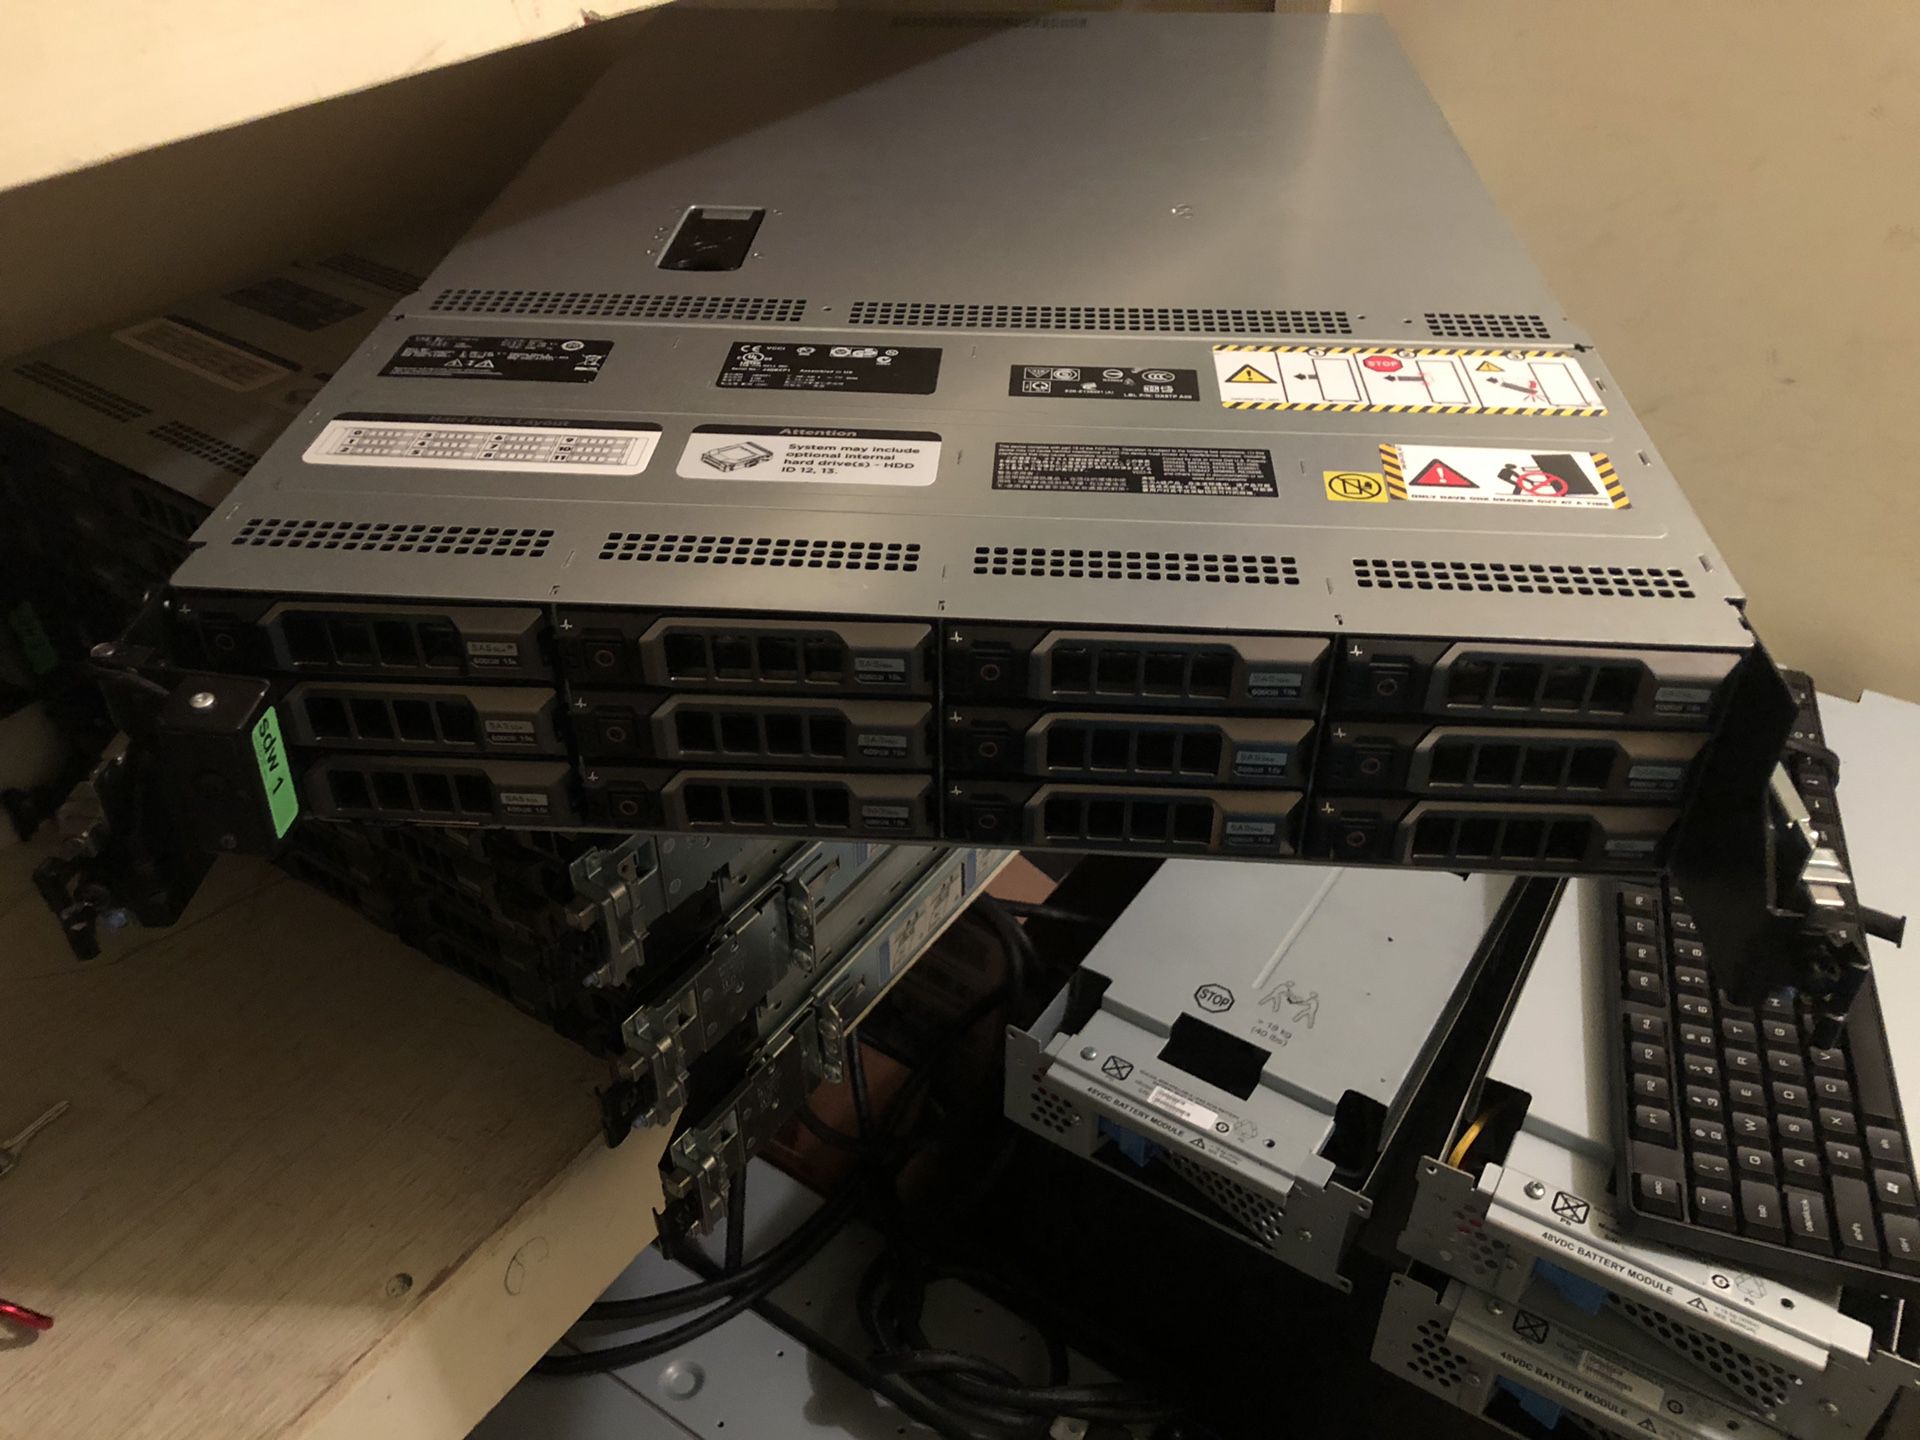 Dell PowerEdge R510 2U Rack Server - 48GB RAM, 2x 6-core Xeon X5670 2.93Ghz CPUs, 12x SAS 3.5in bays